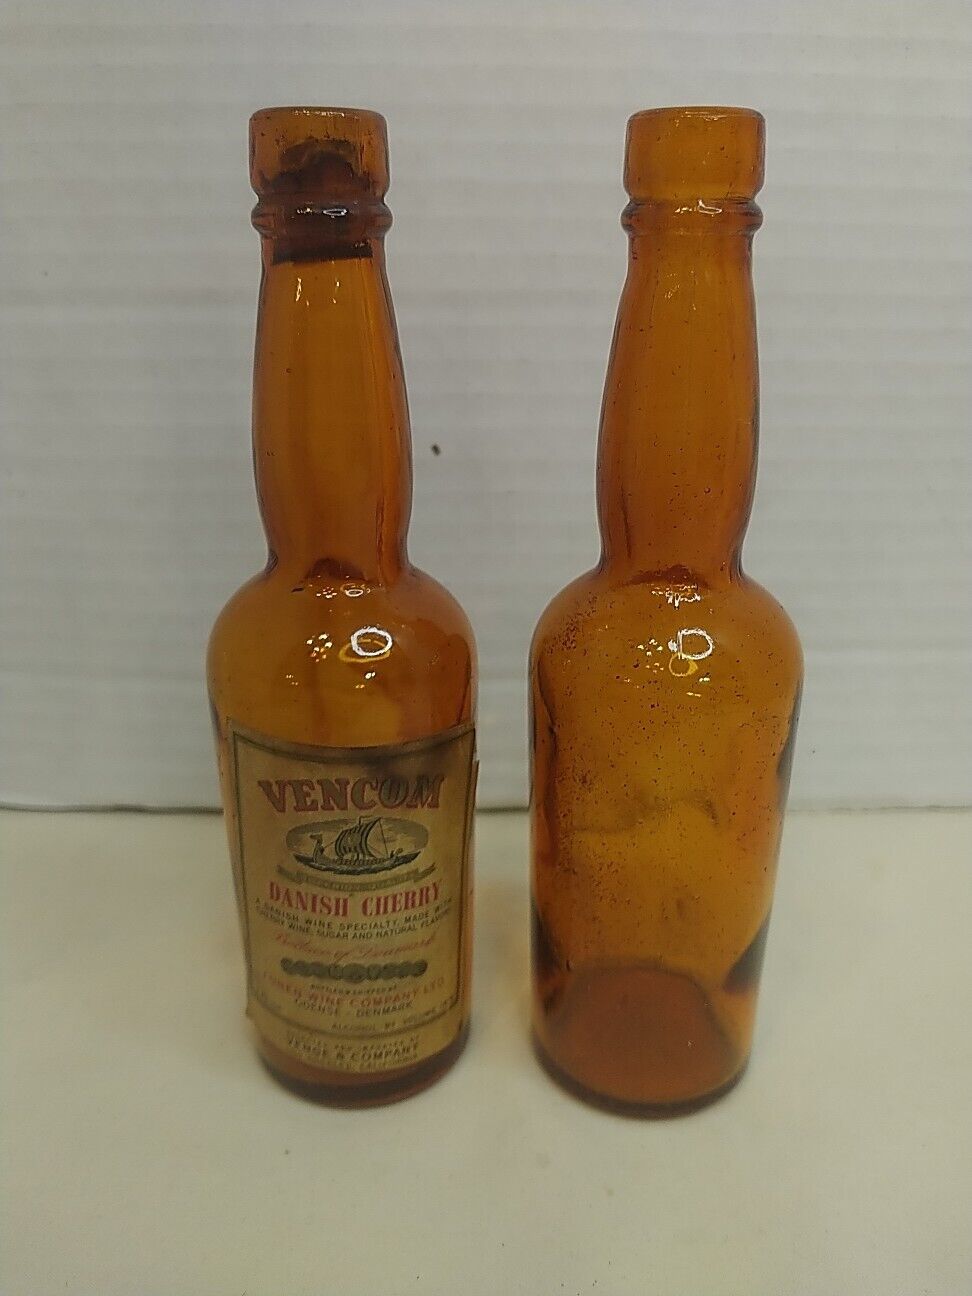 Vintage VENCOM DANISH Cherry Miniature Whiskey Bottles ~ Denmark Empty Collector